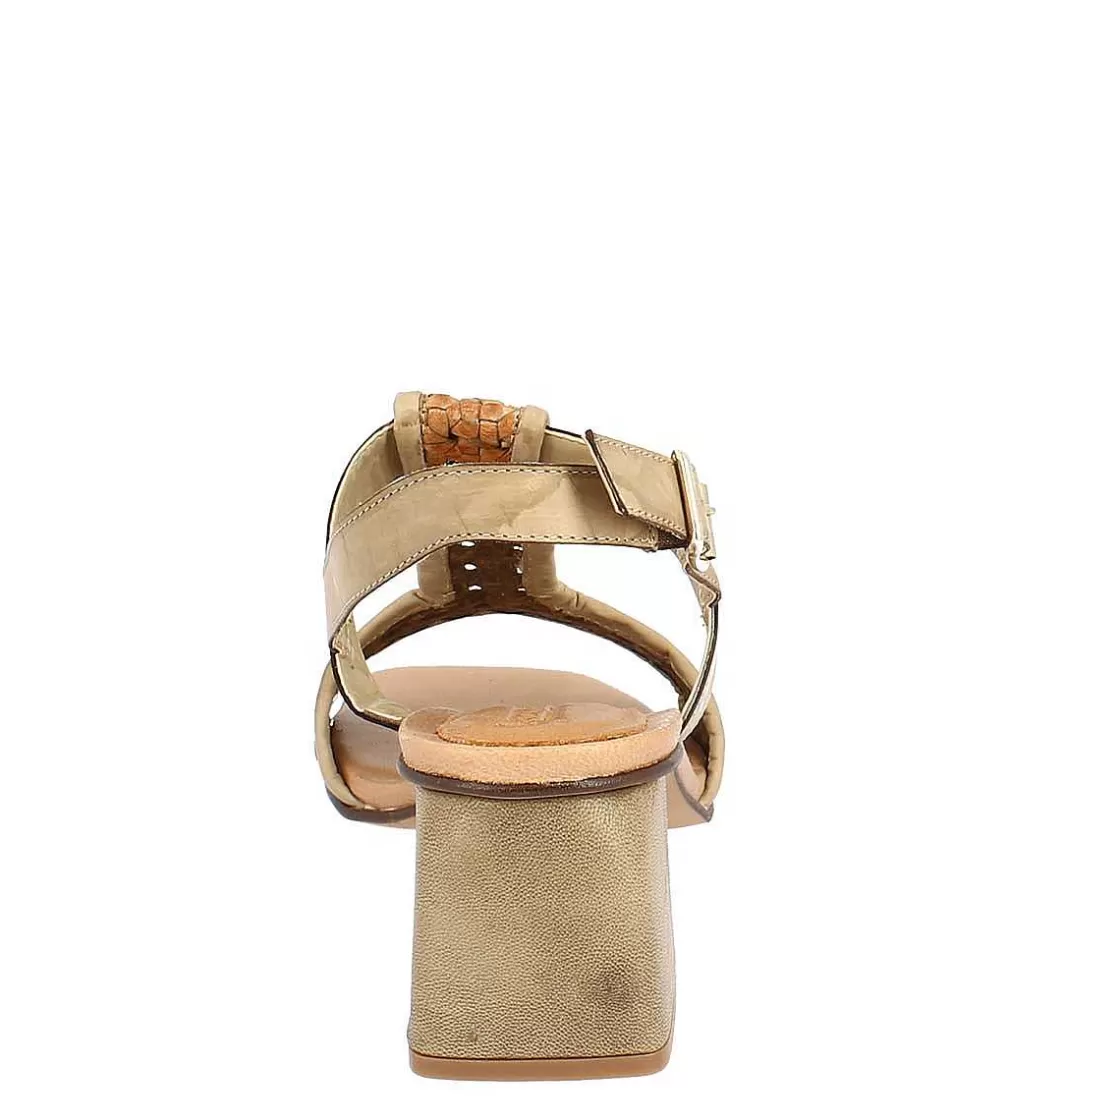 Leonardo Women'S Handmade Slingback Sandals In Beige Leather. Flash Sale